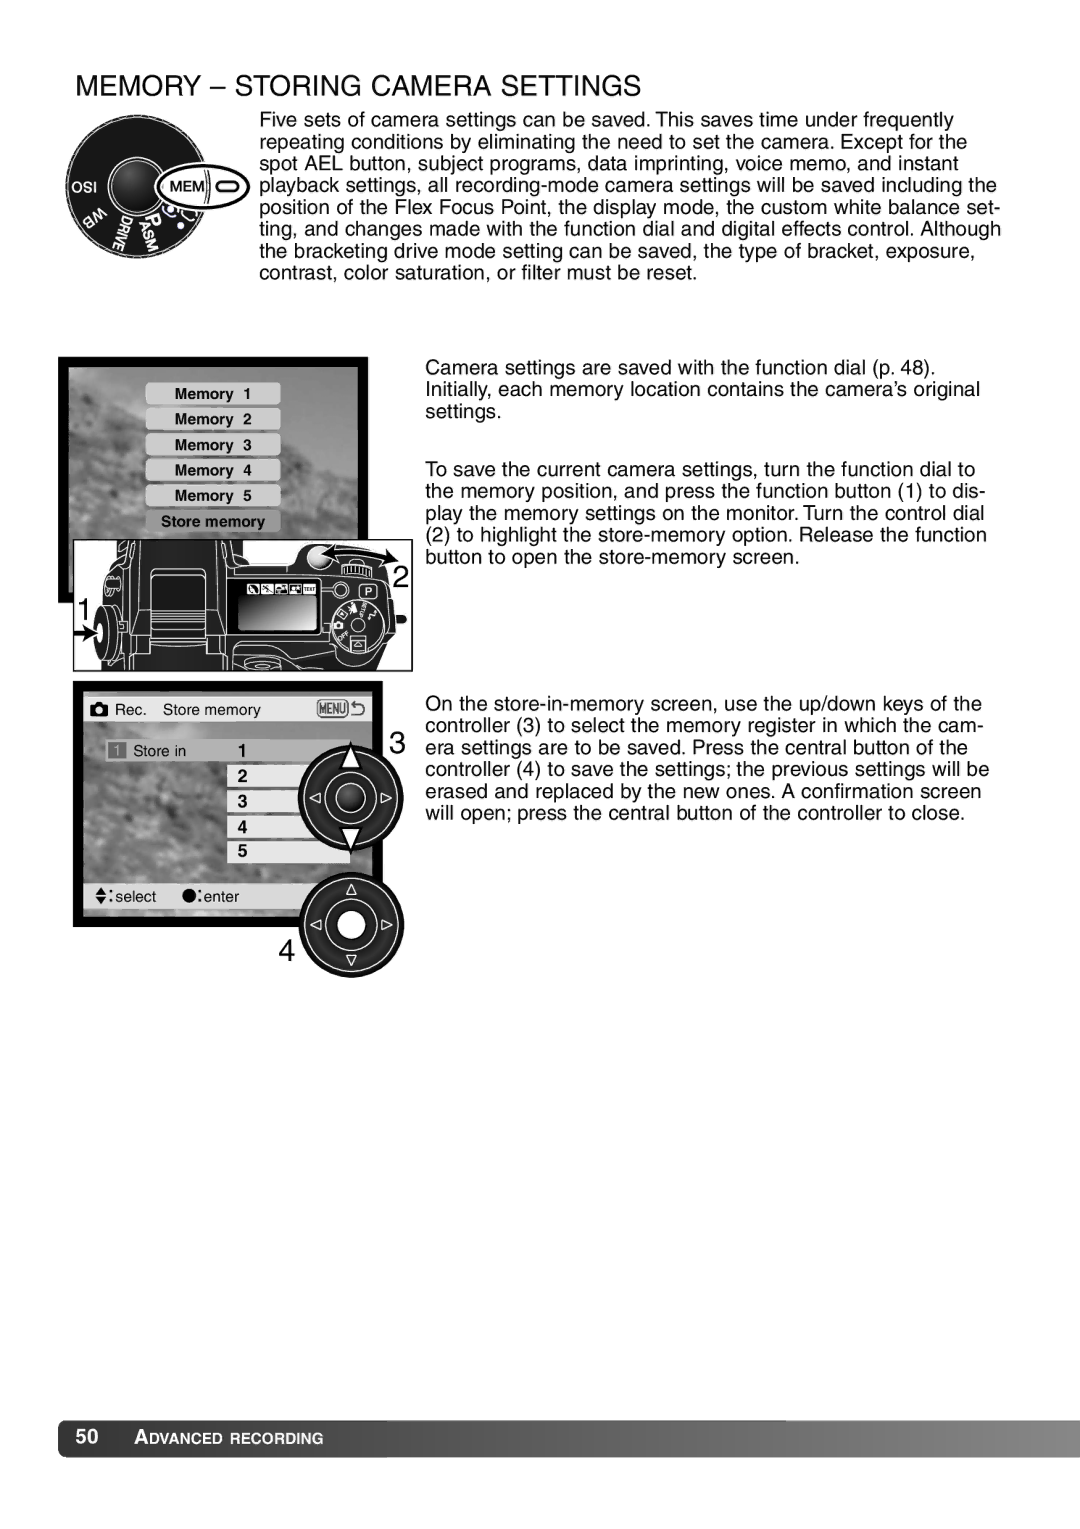 Konica Minolta 7Hi instruction manual Memory Storing Camera Settings 